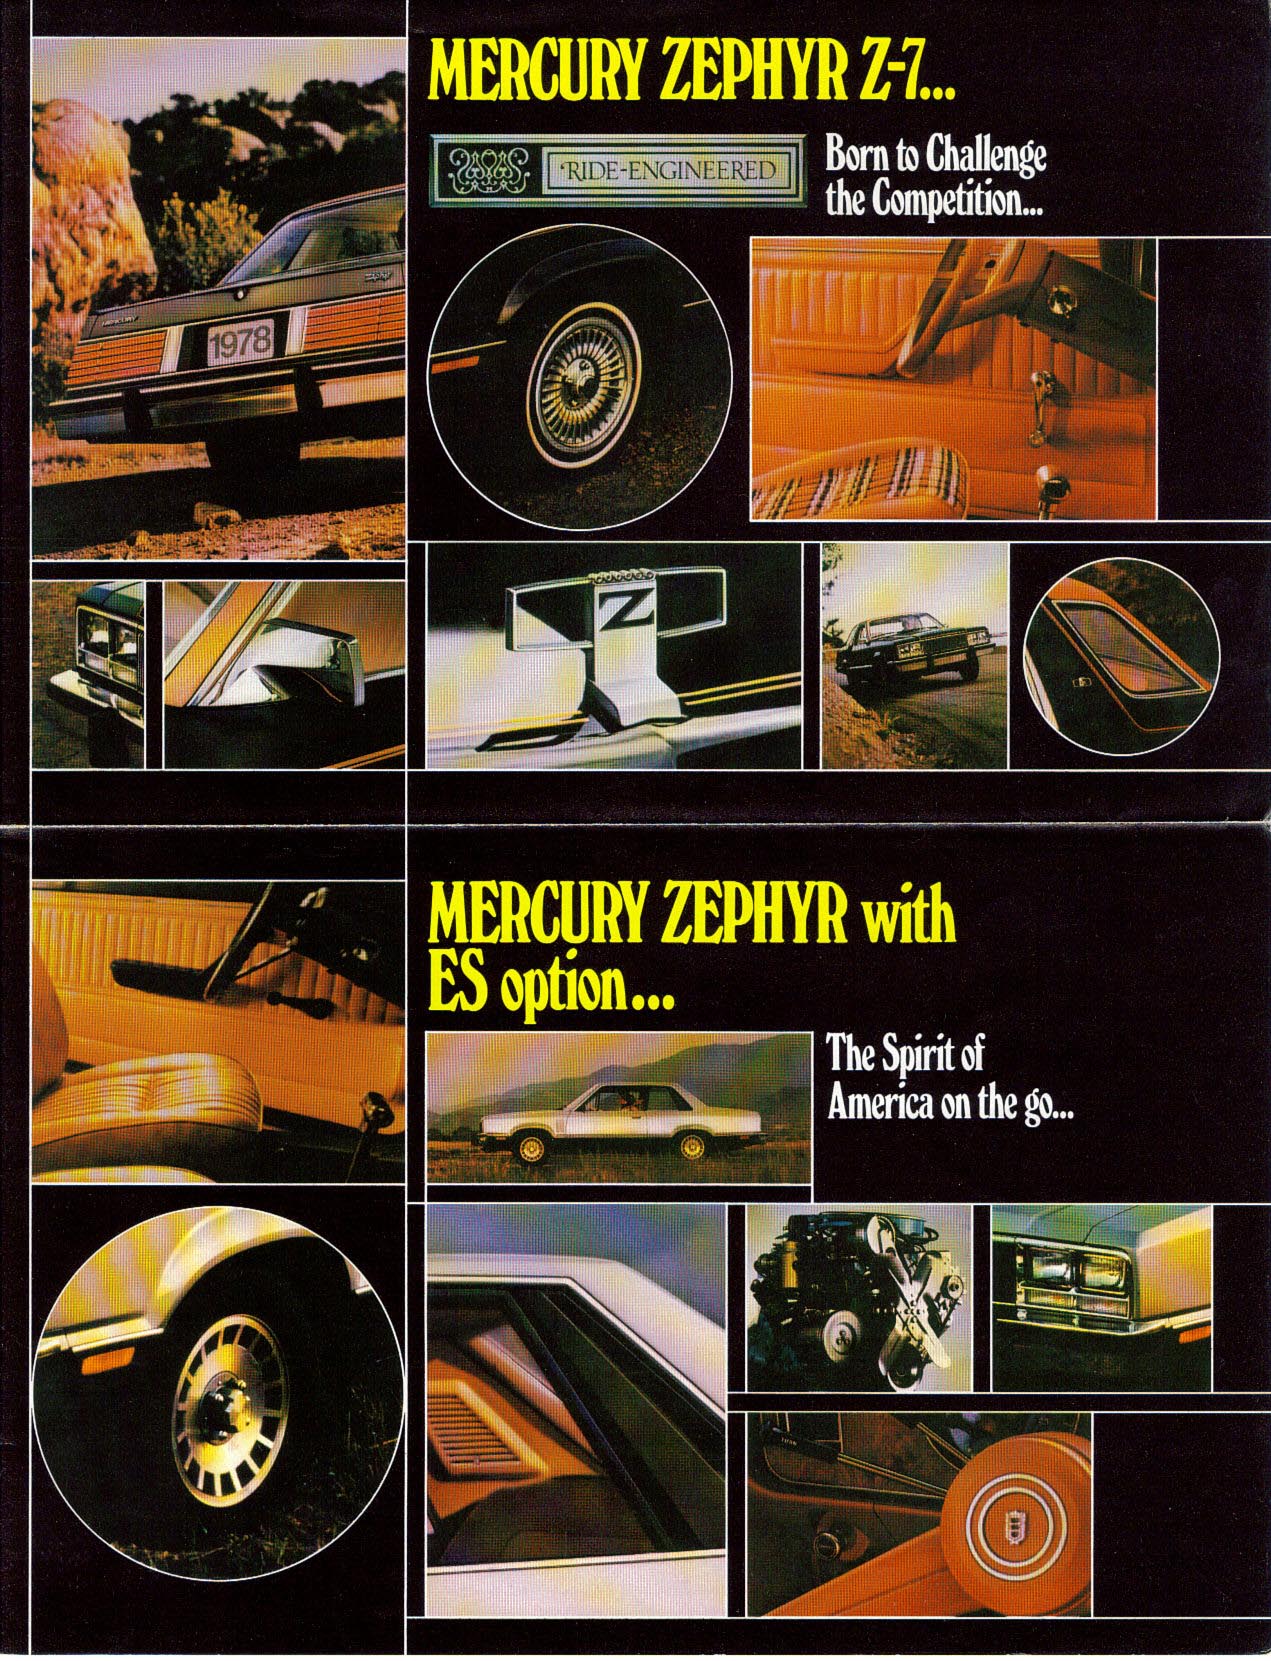 1978 Mercury Zephyr Z-7 and ES Options Pamphlet-02